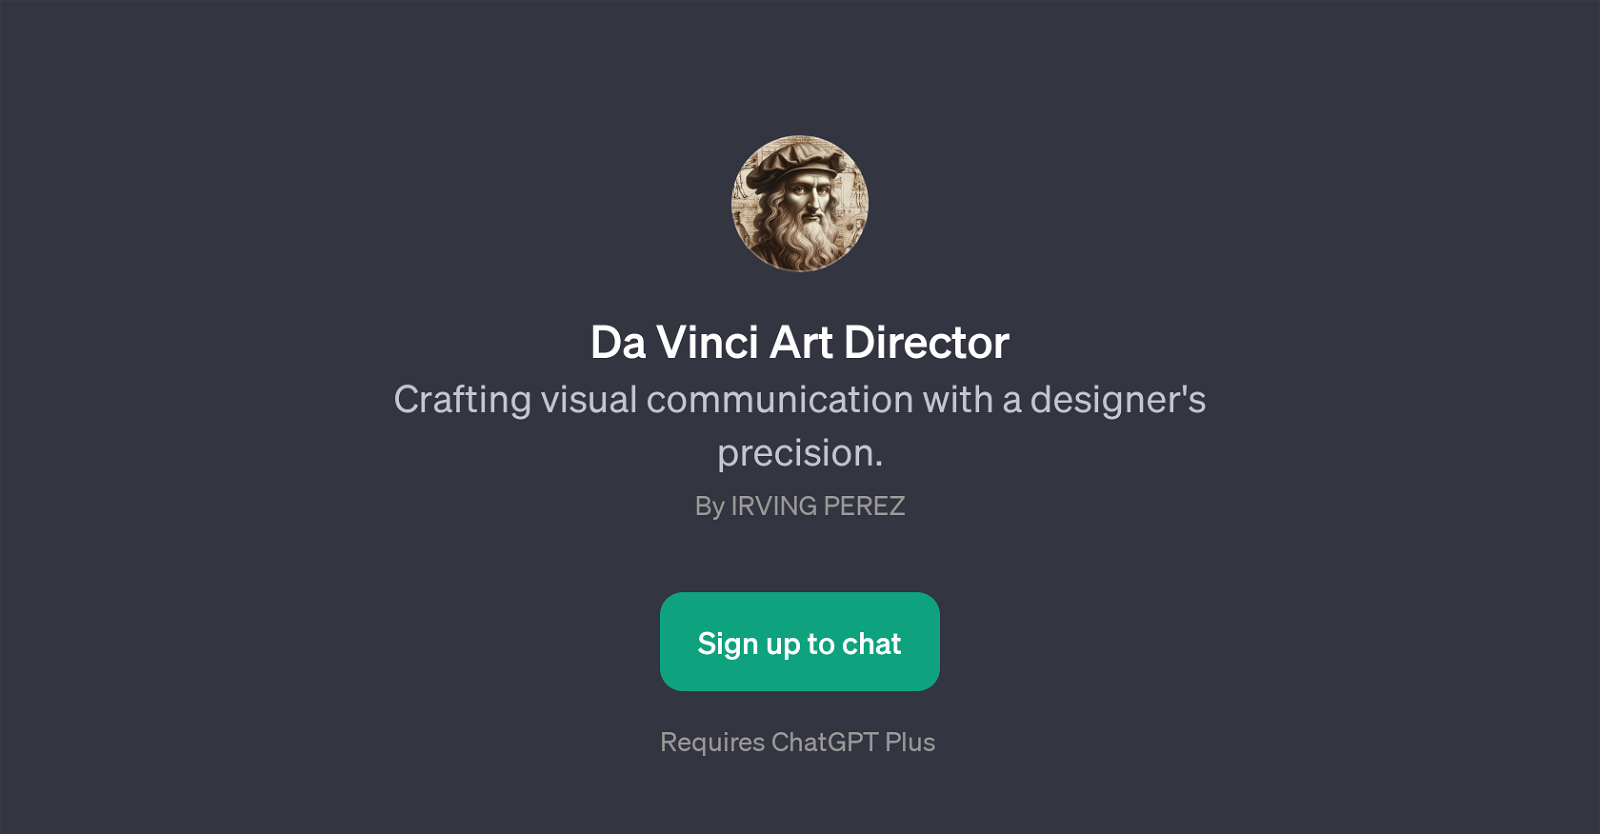 Da Vinci Art Director website